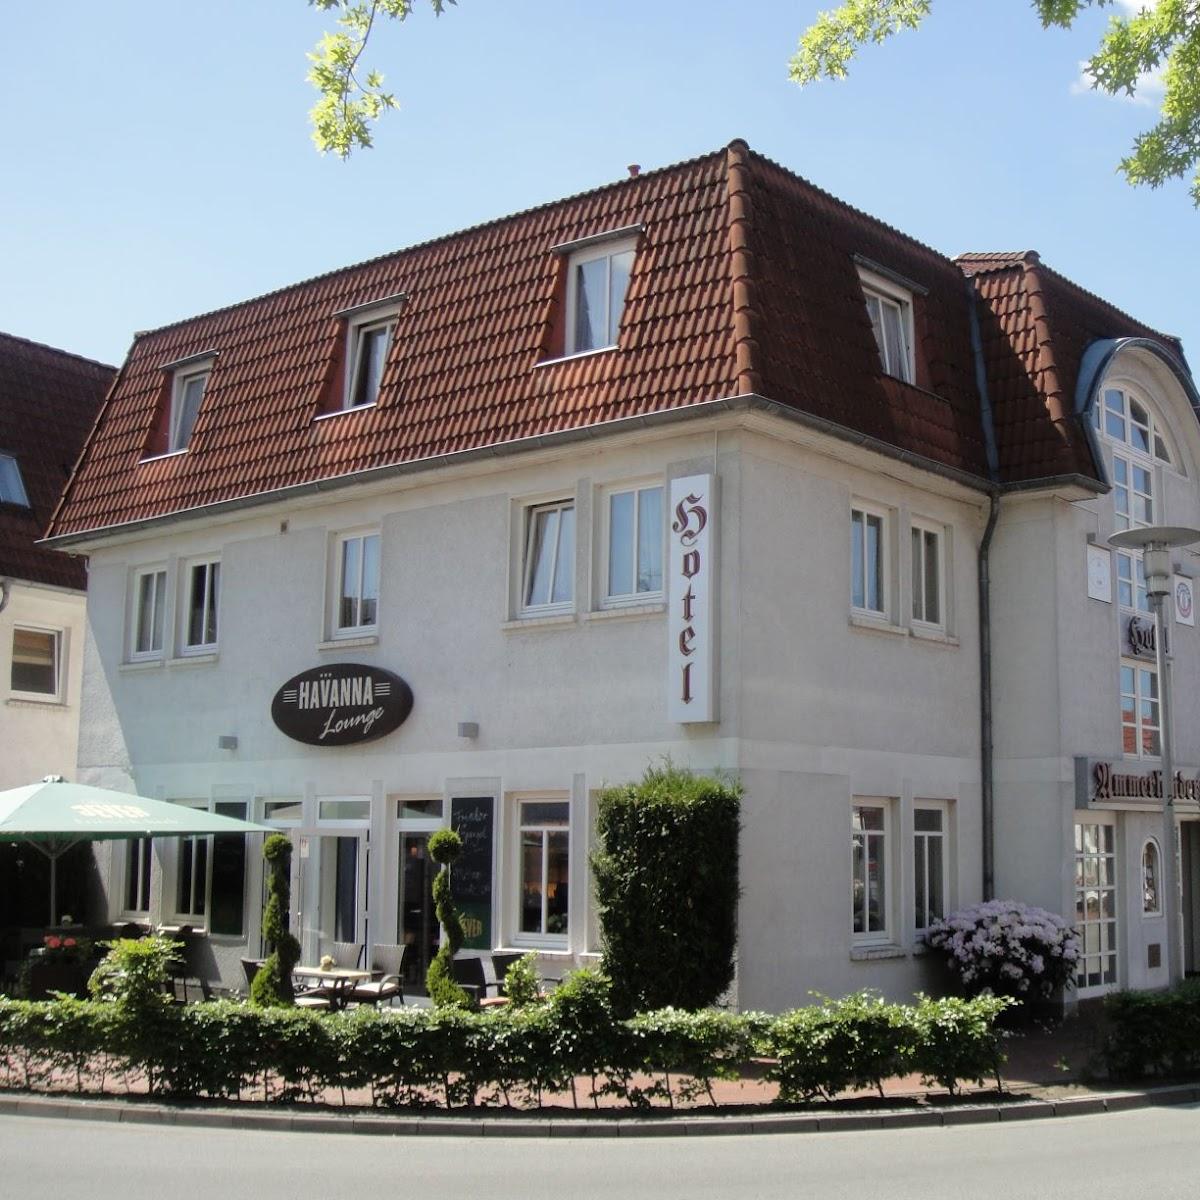 Restaurant "Hotel Ammerländer Hof" in Westerstede